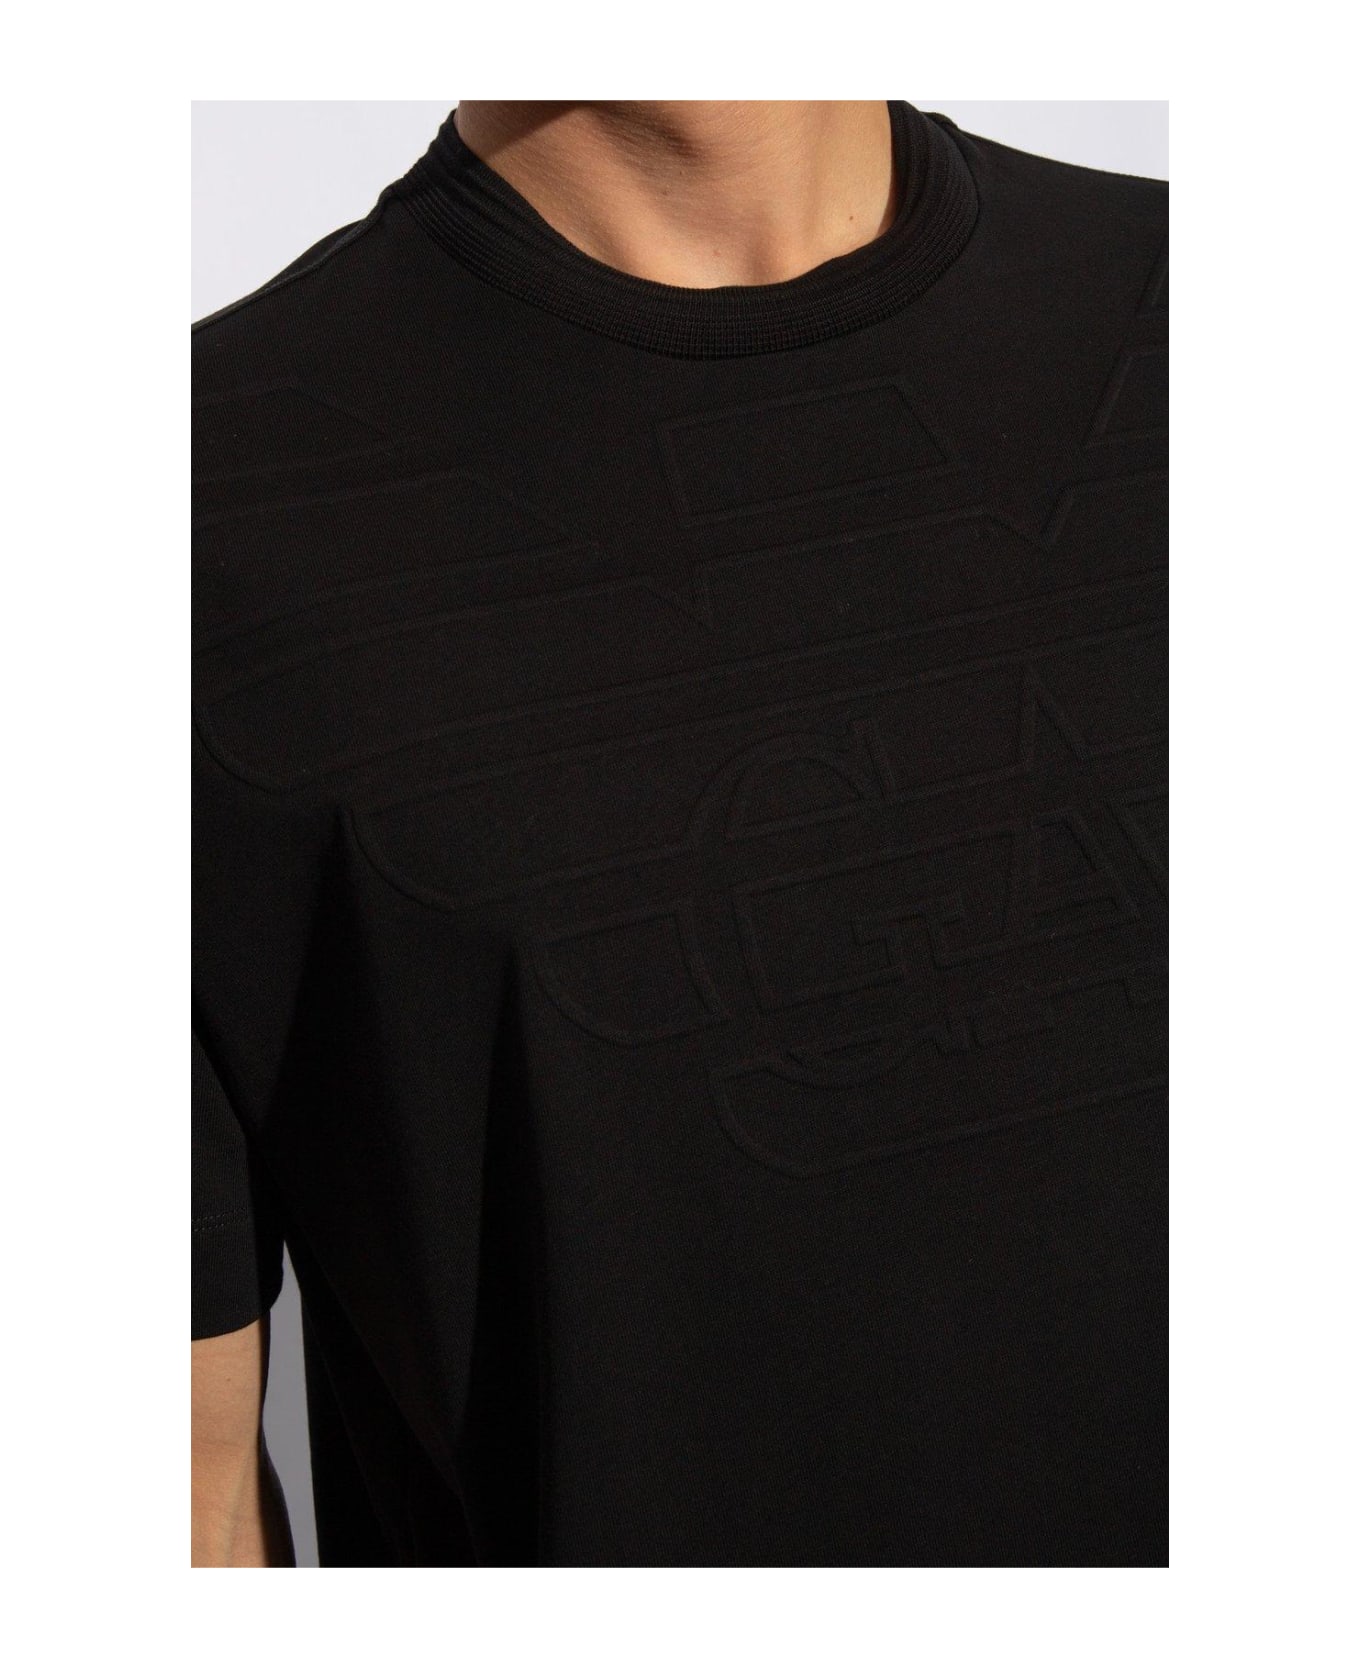 Emporio Armani T-shirt With Logo - BLACK